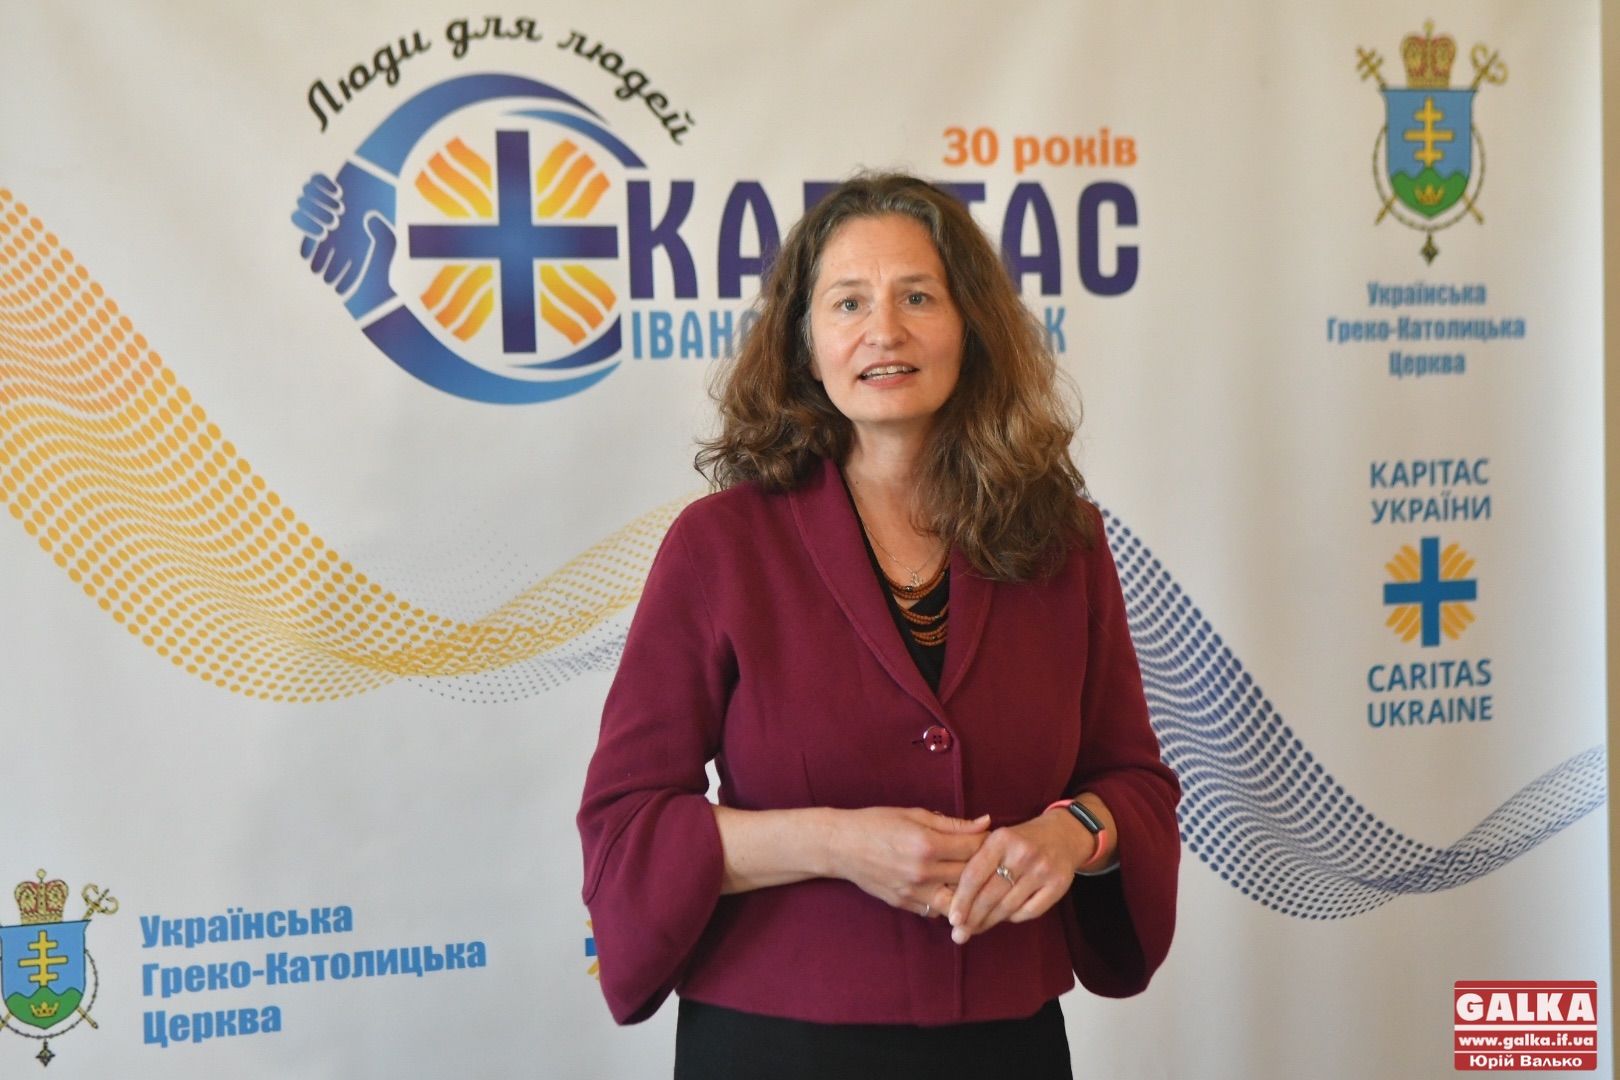 Тетяна Ставнича, Директорка "Карітас-Україна"